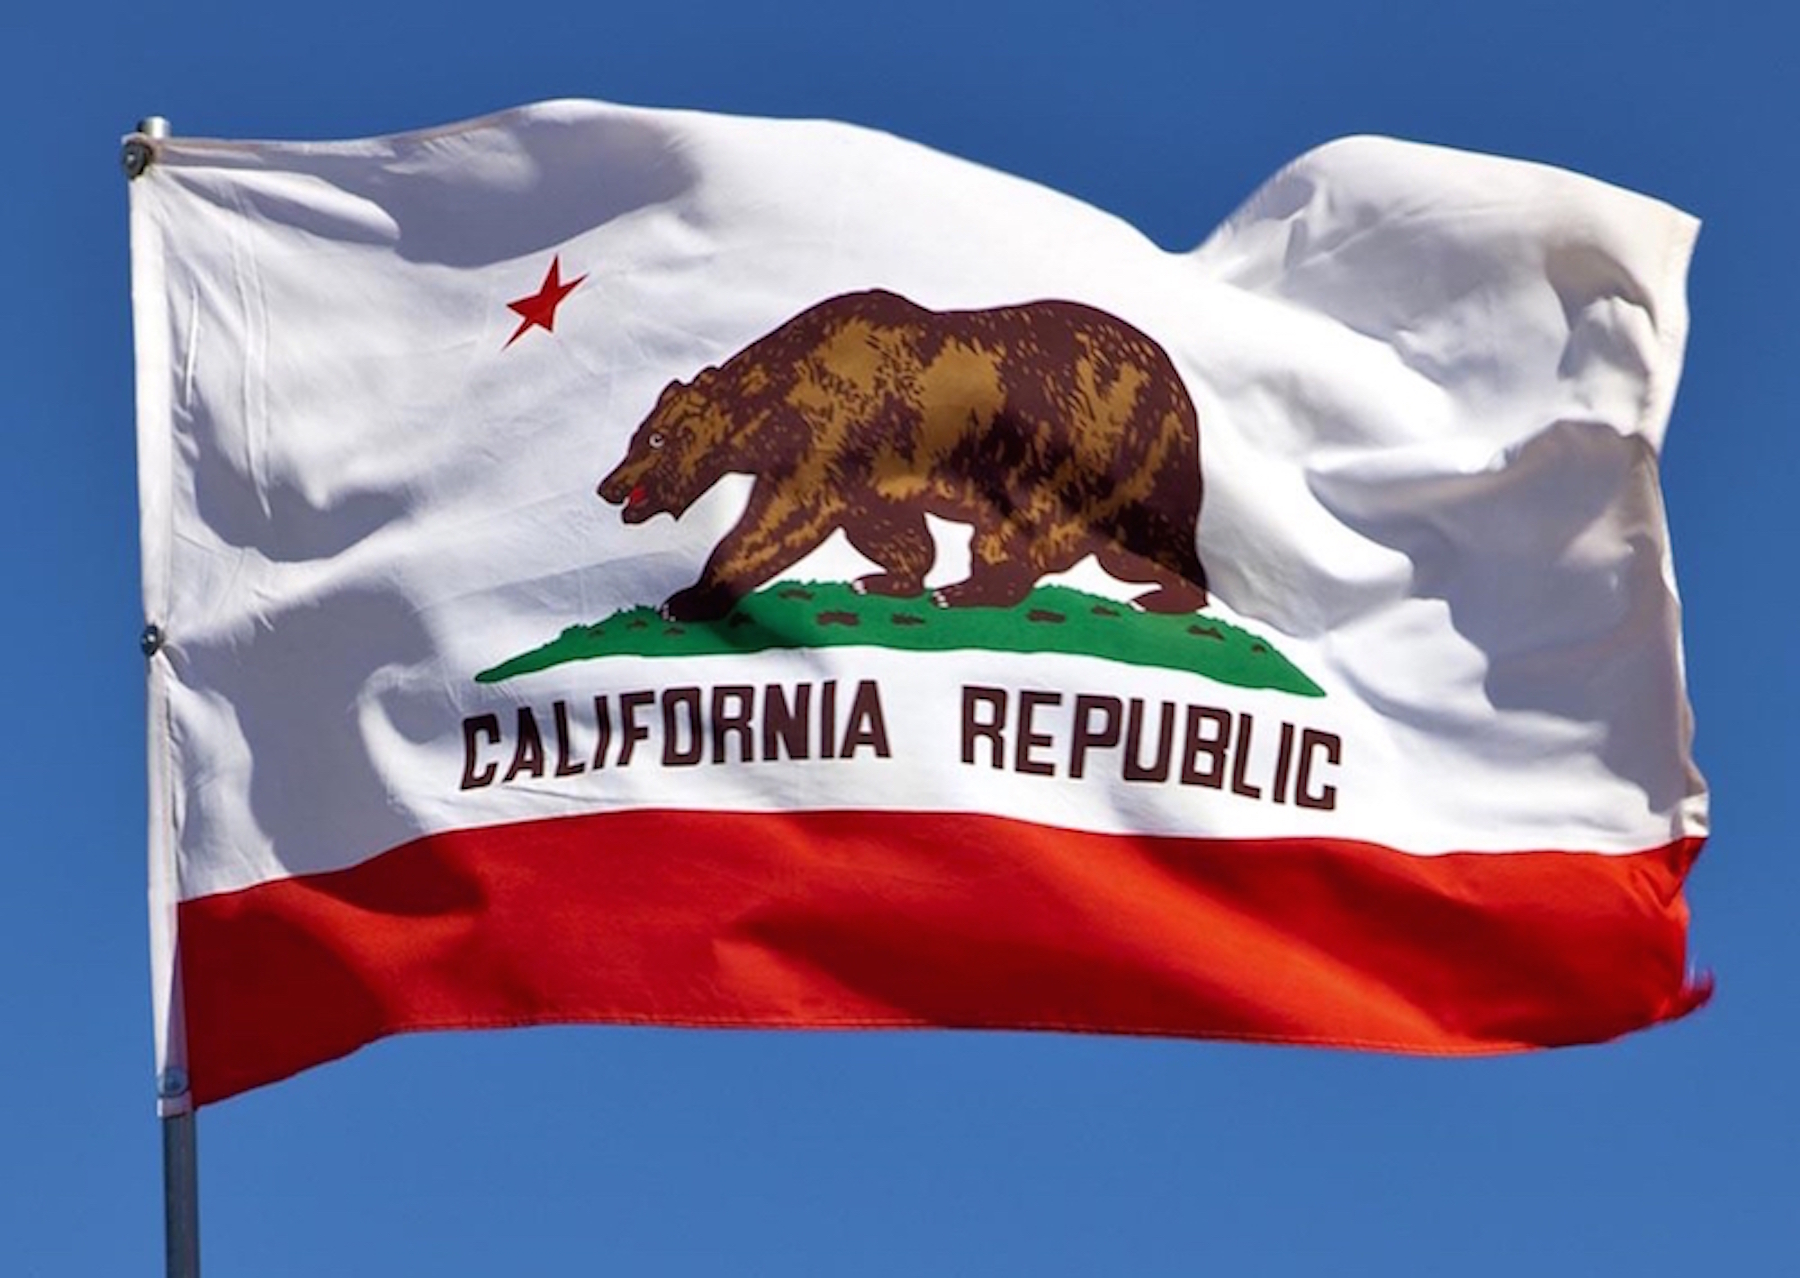 https://blogmedia.evbstatic.com/wp-content/uploads/rally-legacy/2017/04/21115113/california-state-flag-2.jpg